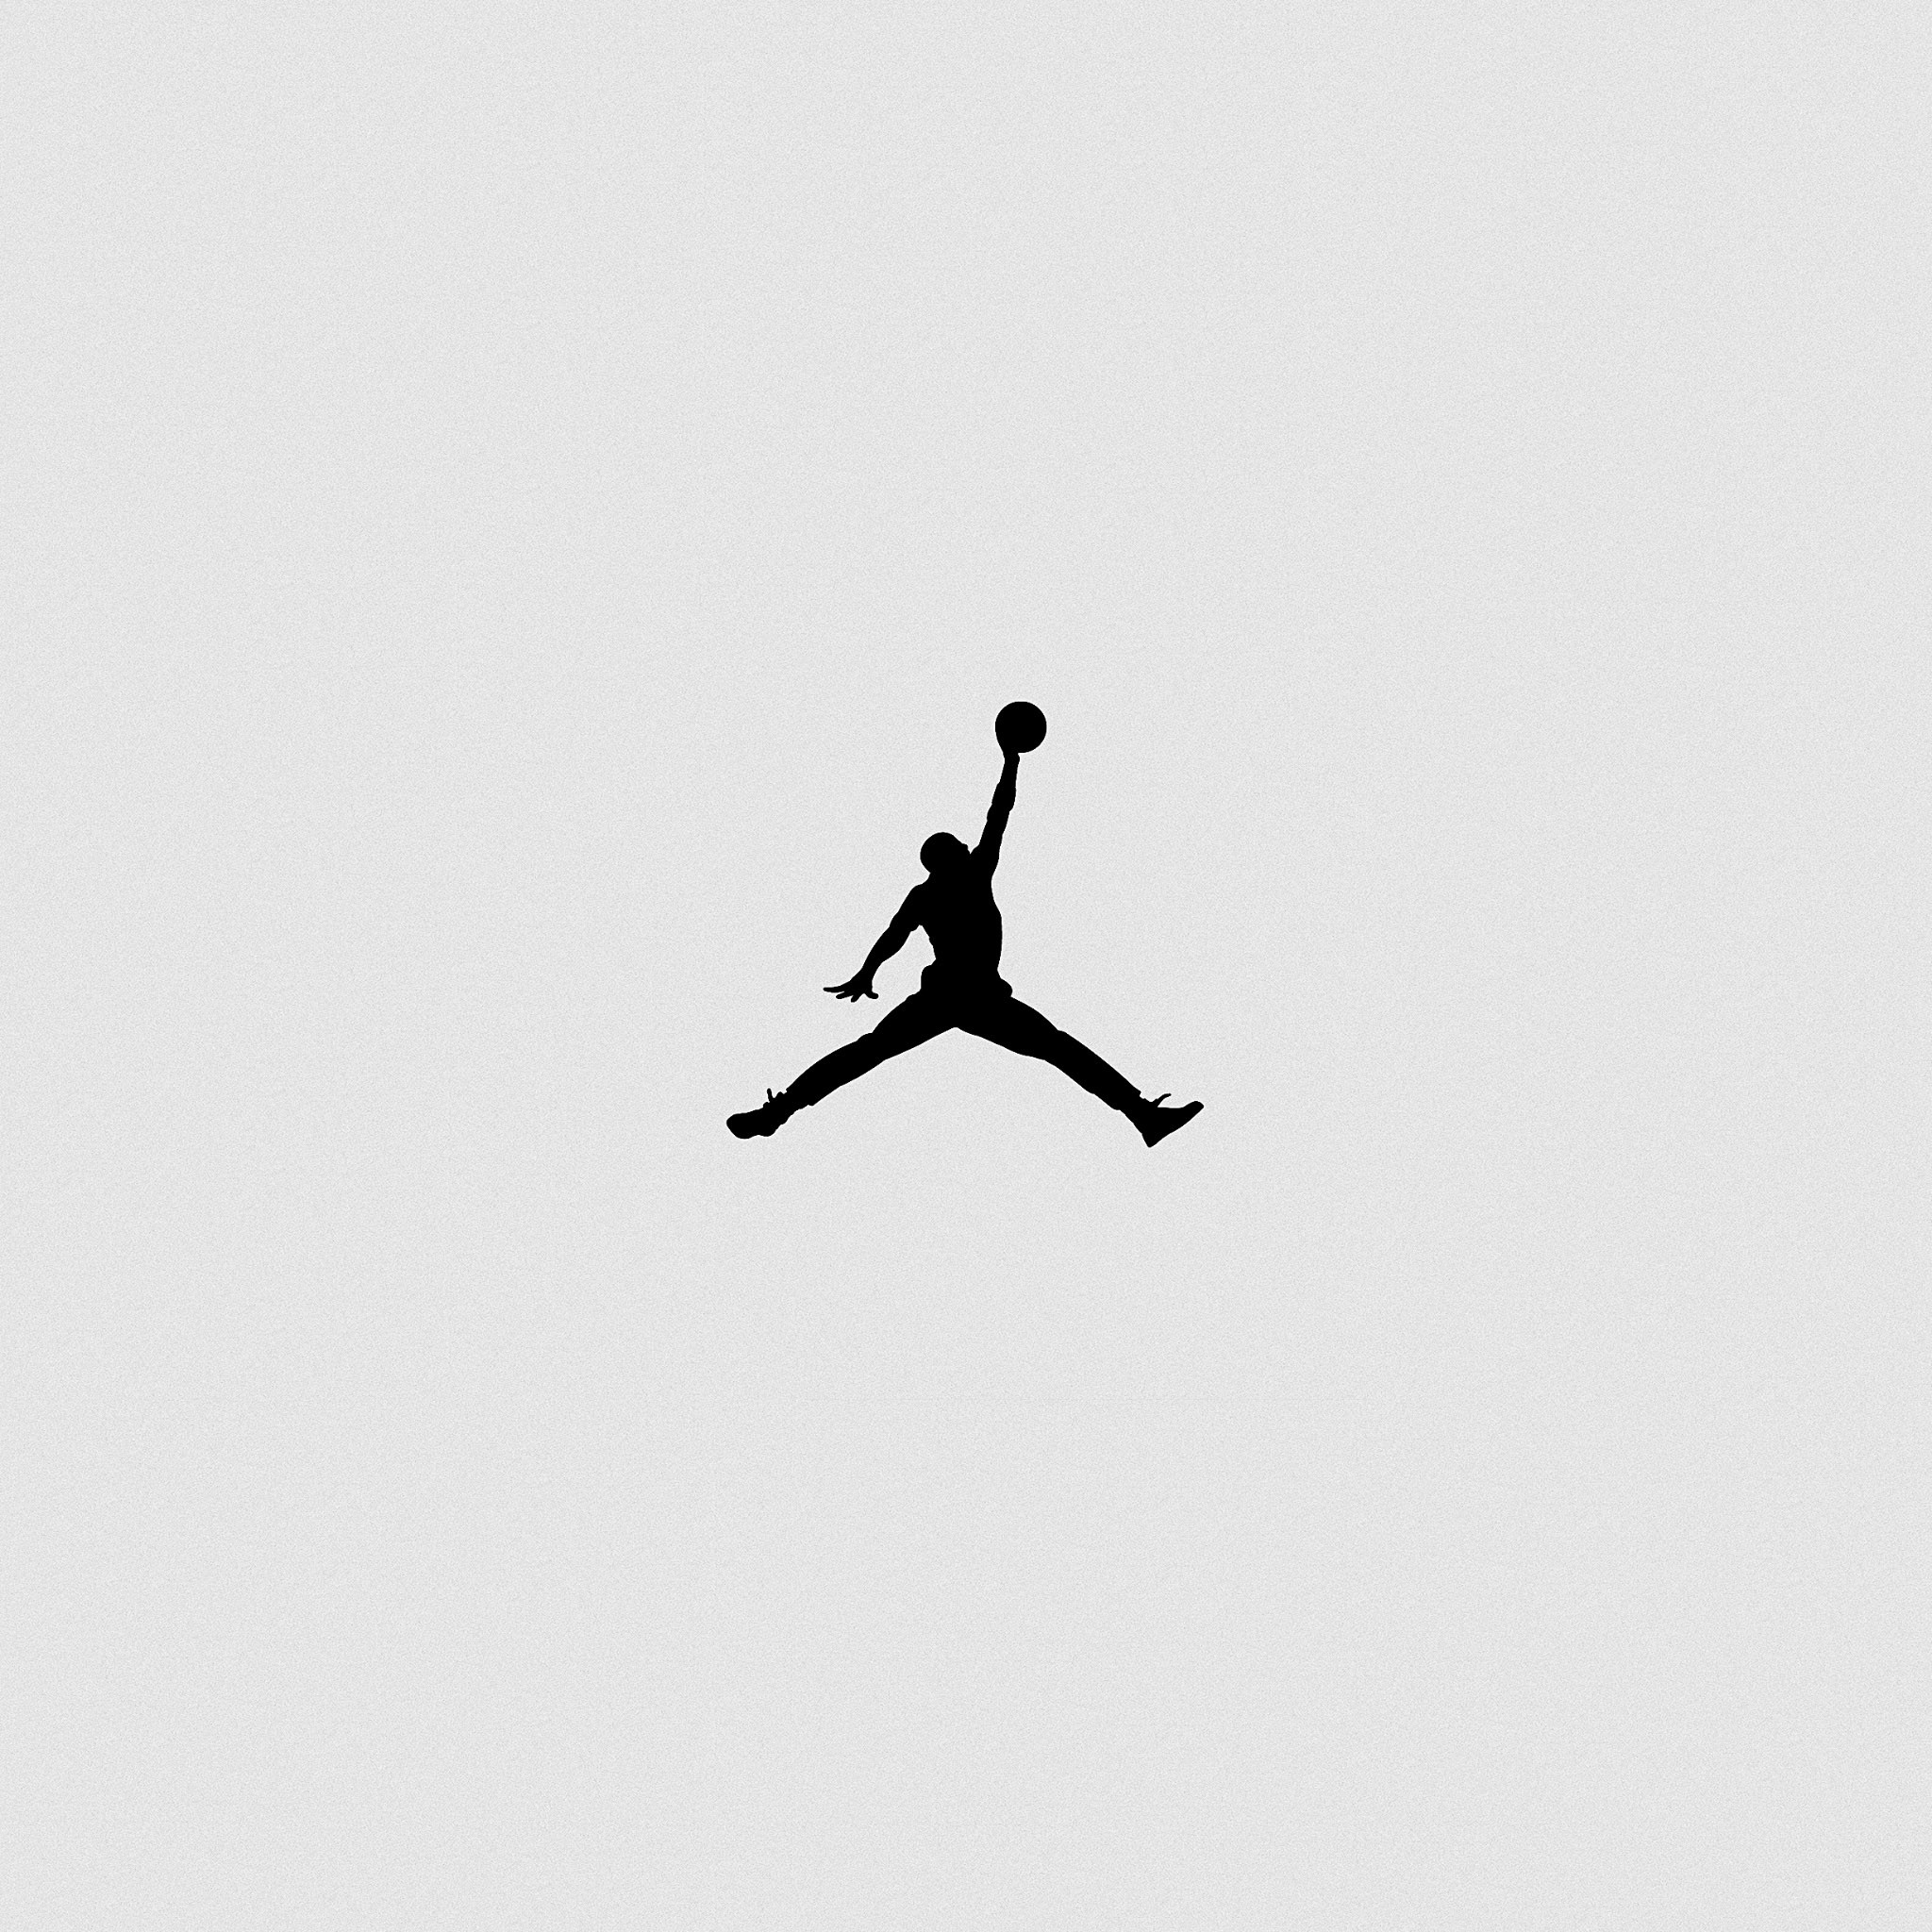 Jordan Fly Wade Nike Shoe Art iPhone Wallpapers Free Download